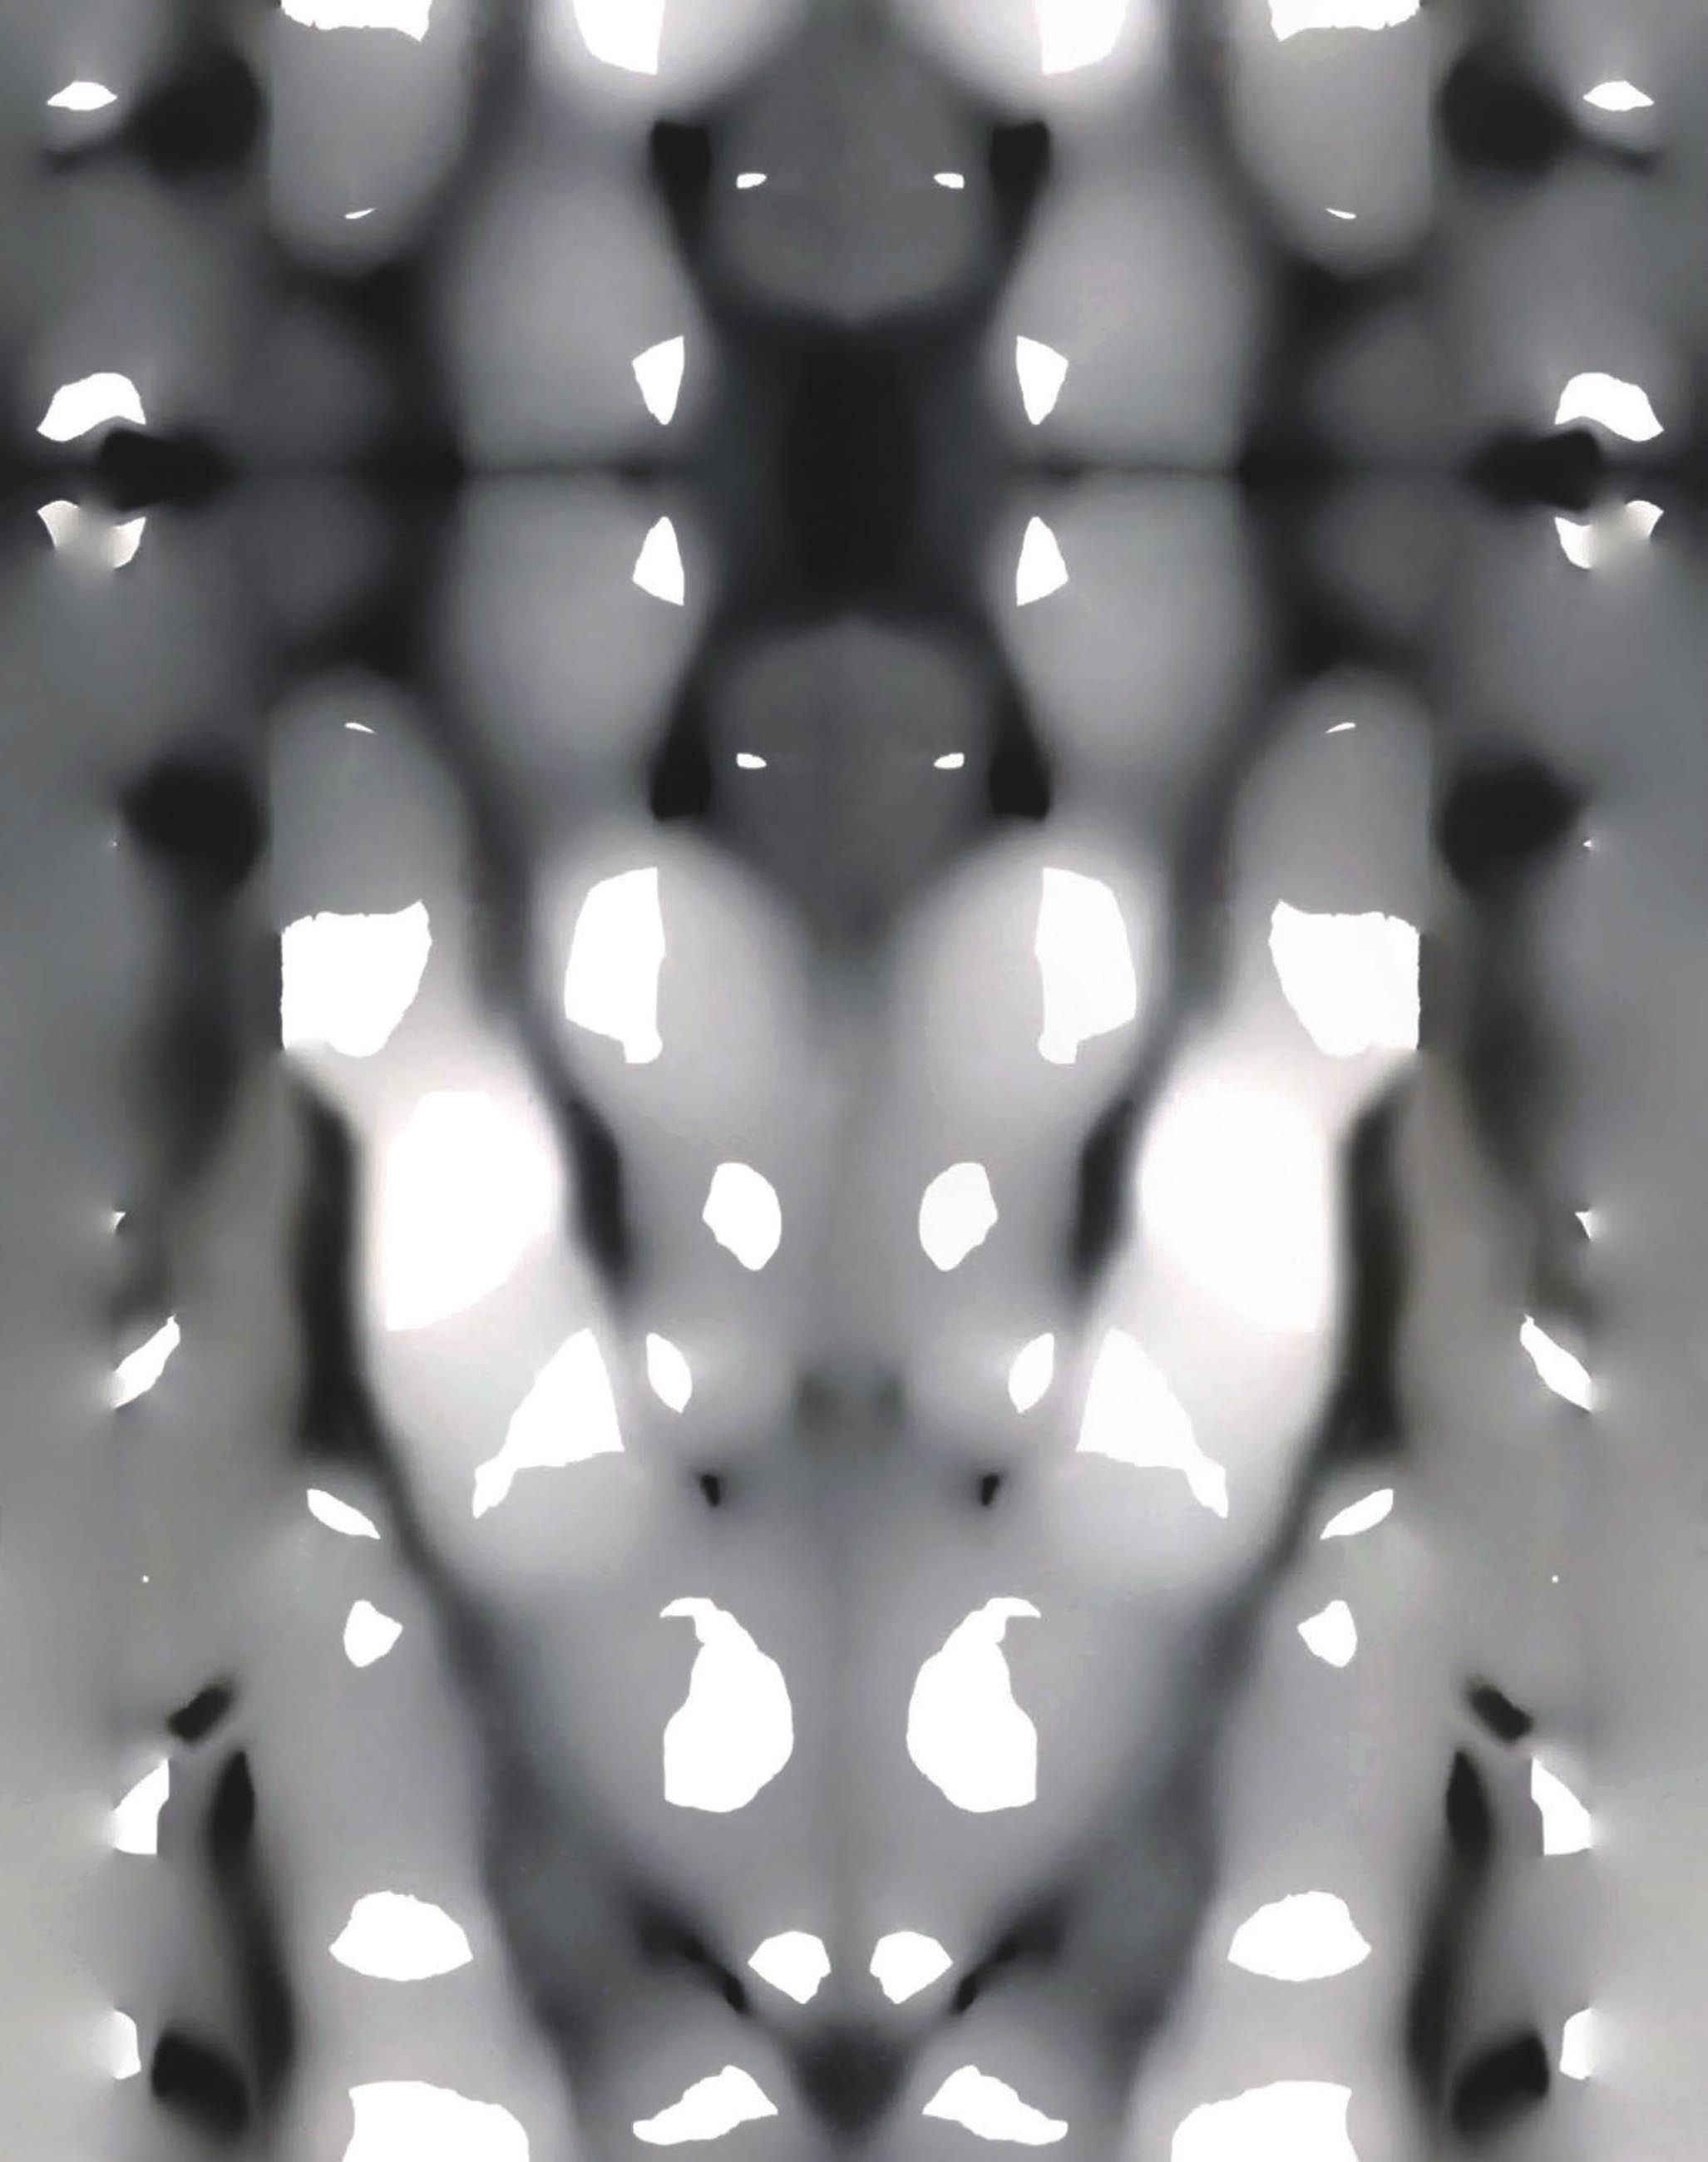 grey, white, and black shapes arrayed symmetrically as if through a kaleidoscope